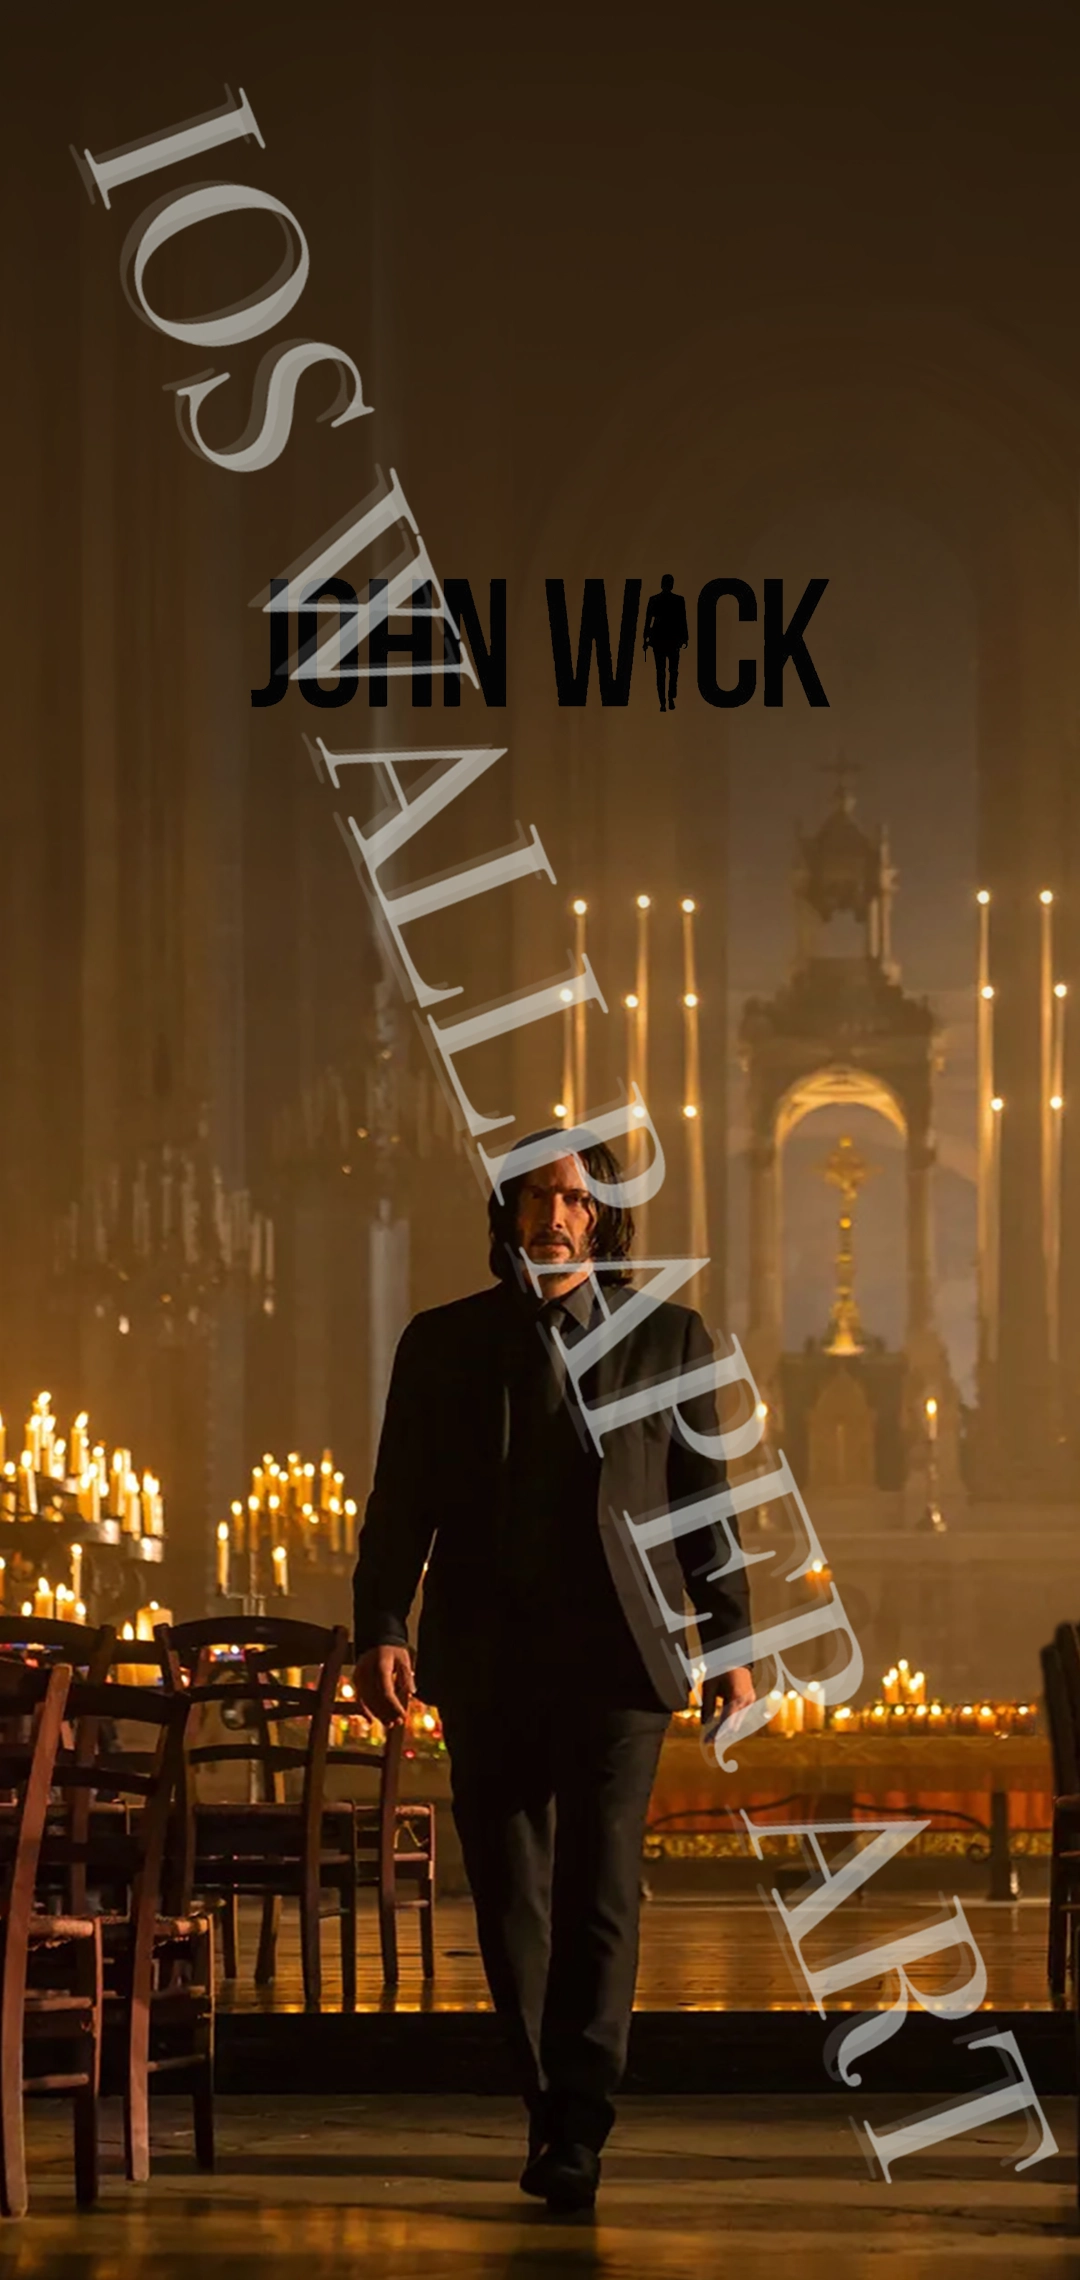 John Wick 4 - Keanu Reeves | Digital Download